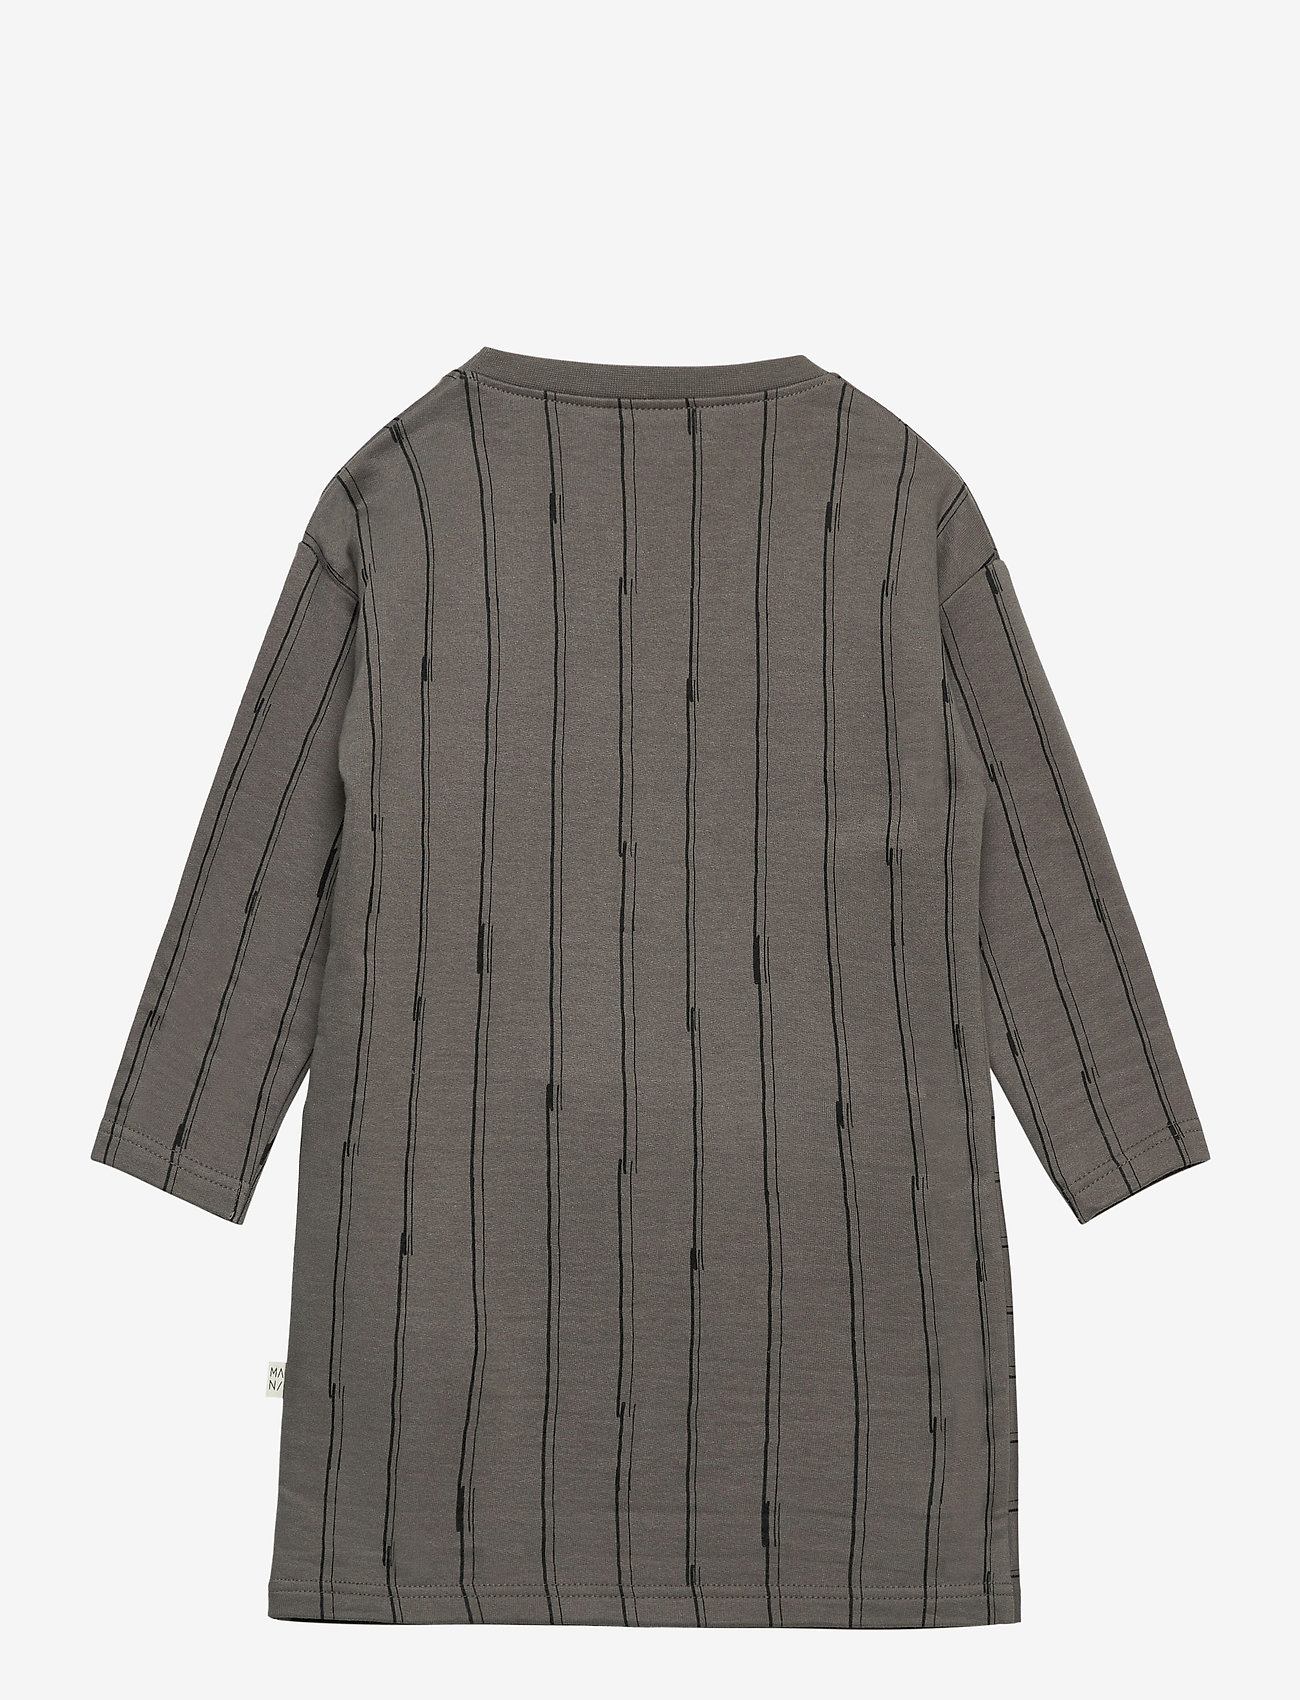 Mainio - STICKS SWEAT TUNIC - long-sleeved casual dresses - grey - 1